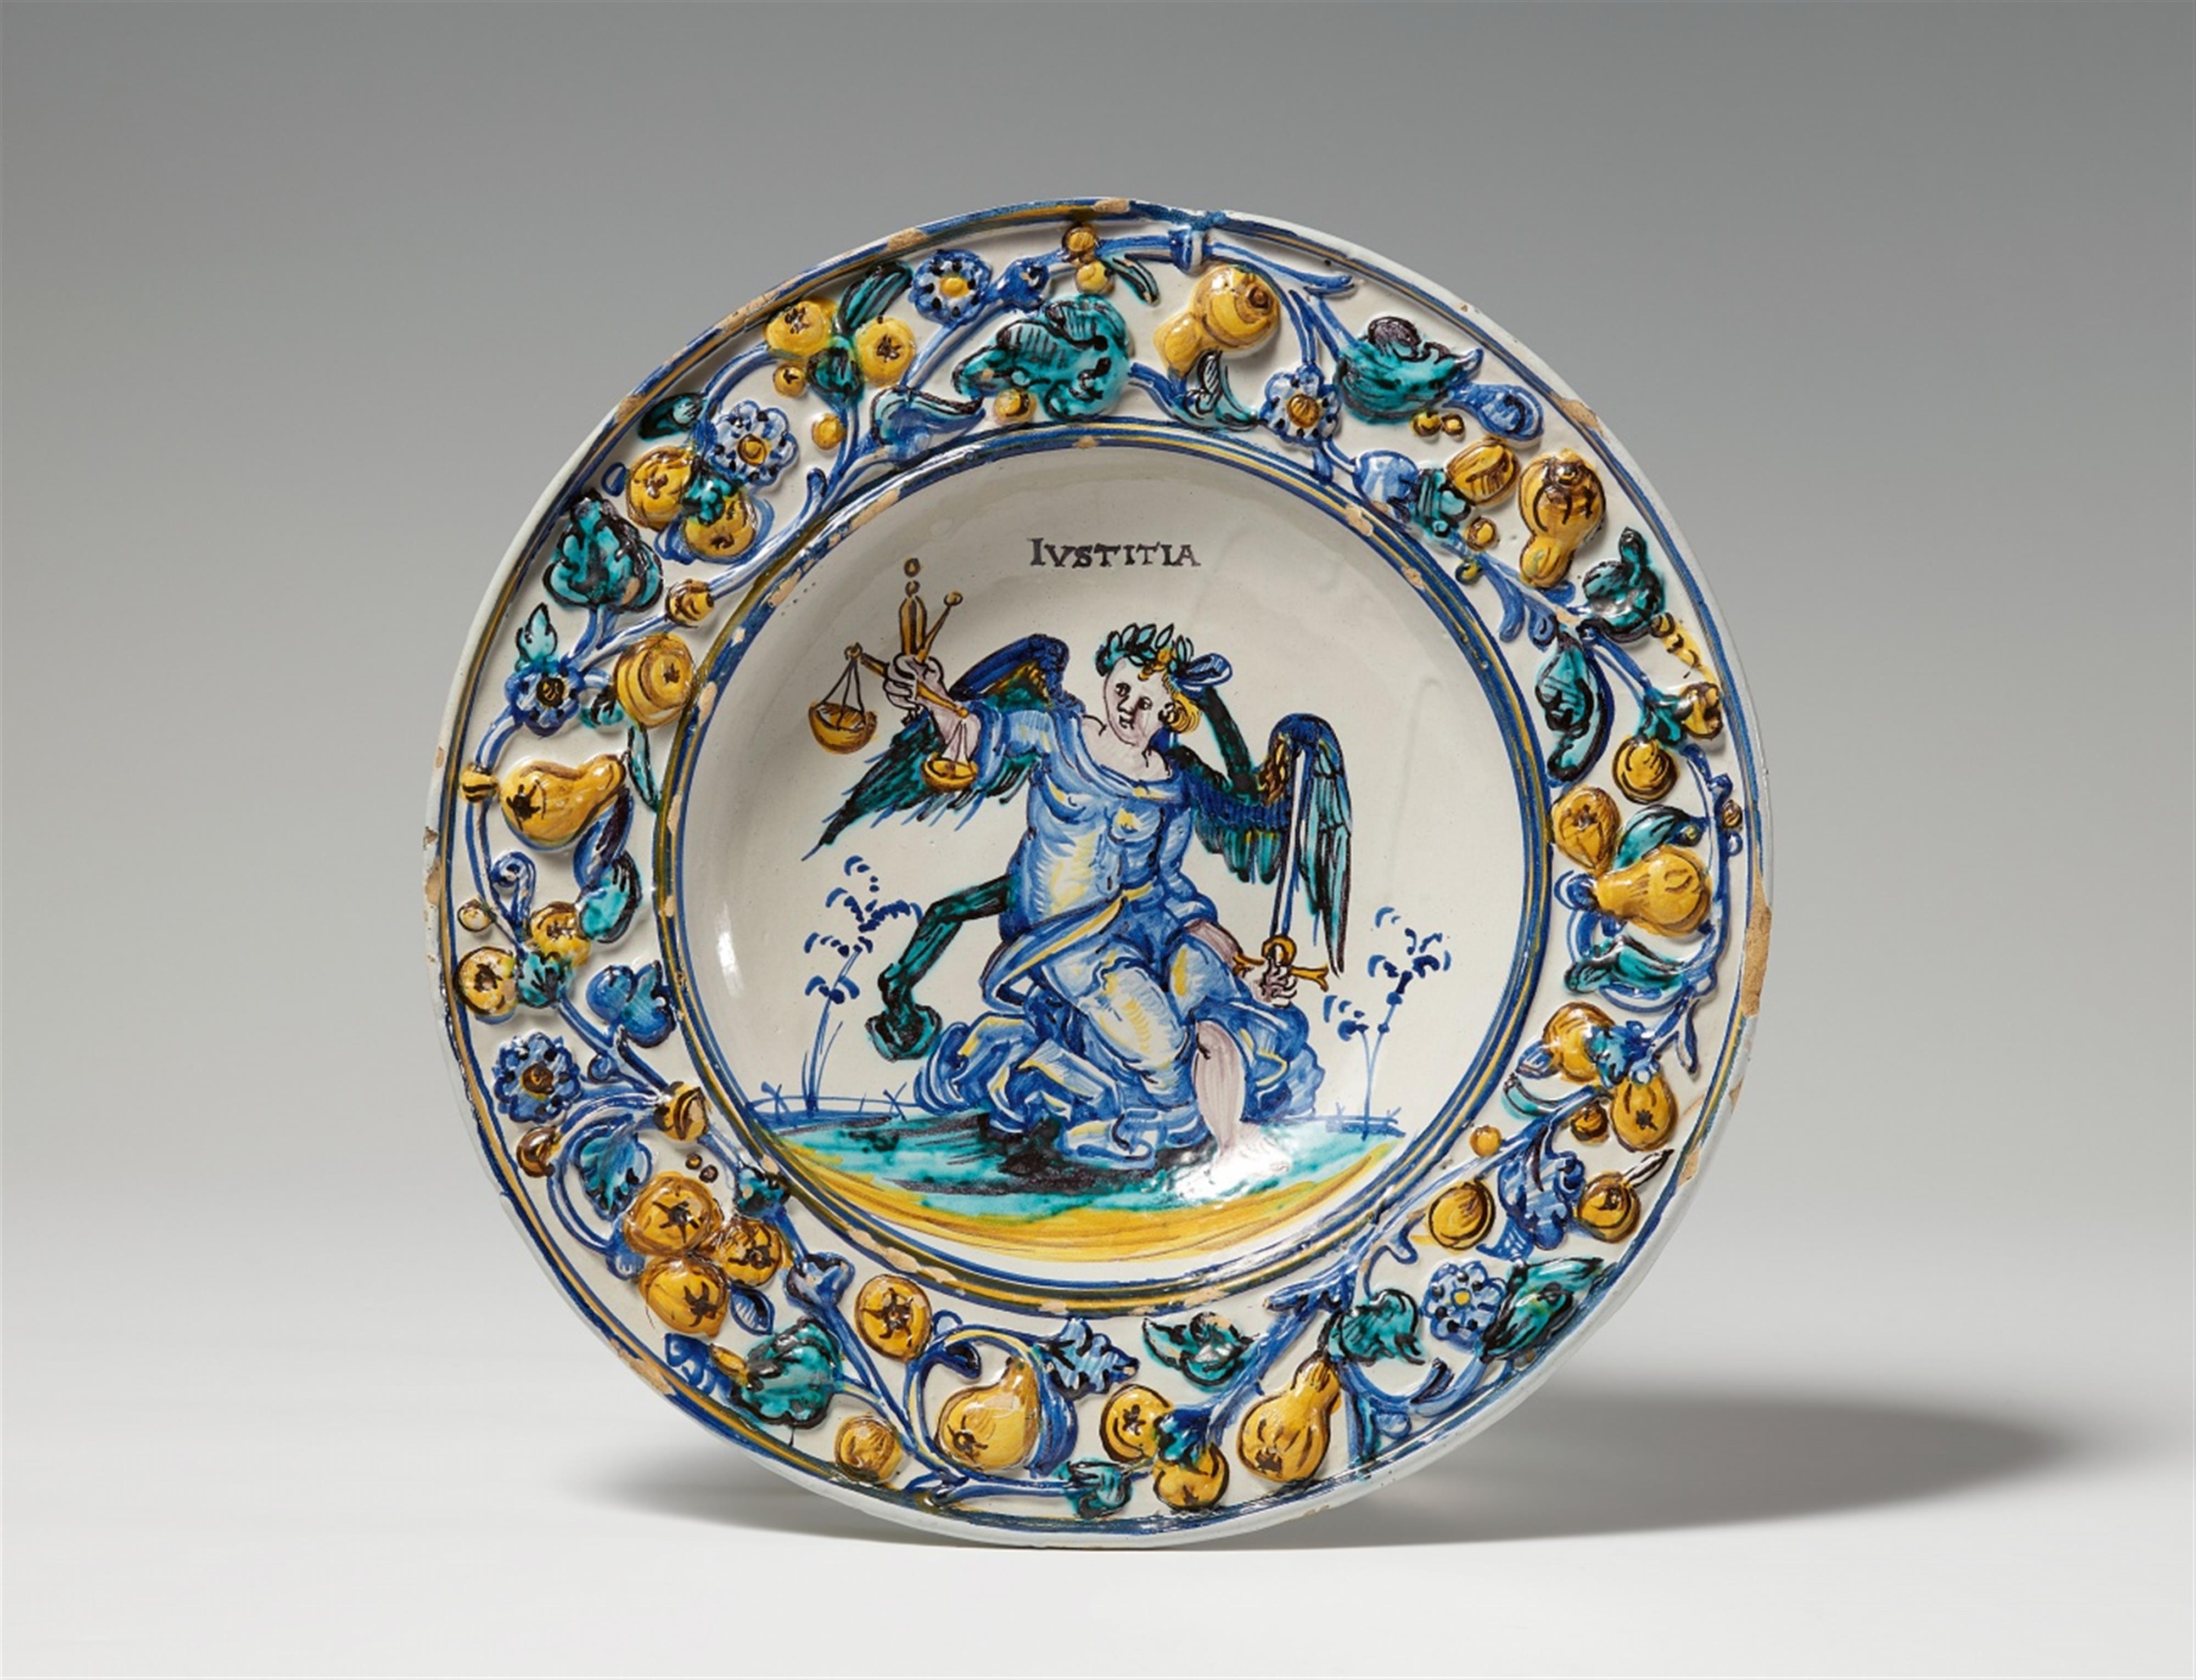 A Winterthur faience bowl 'IVSTITIA' - image-1